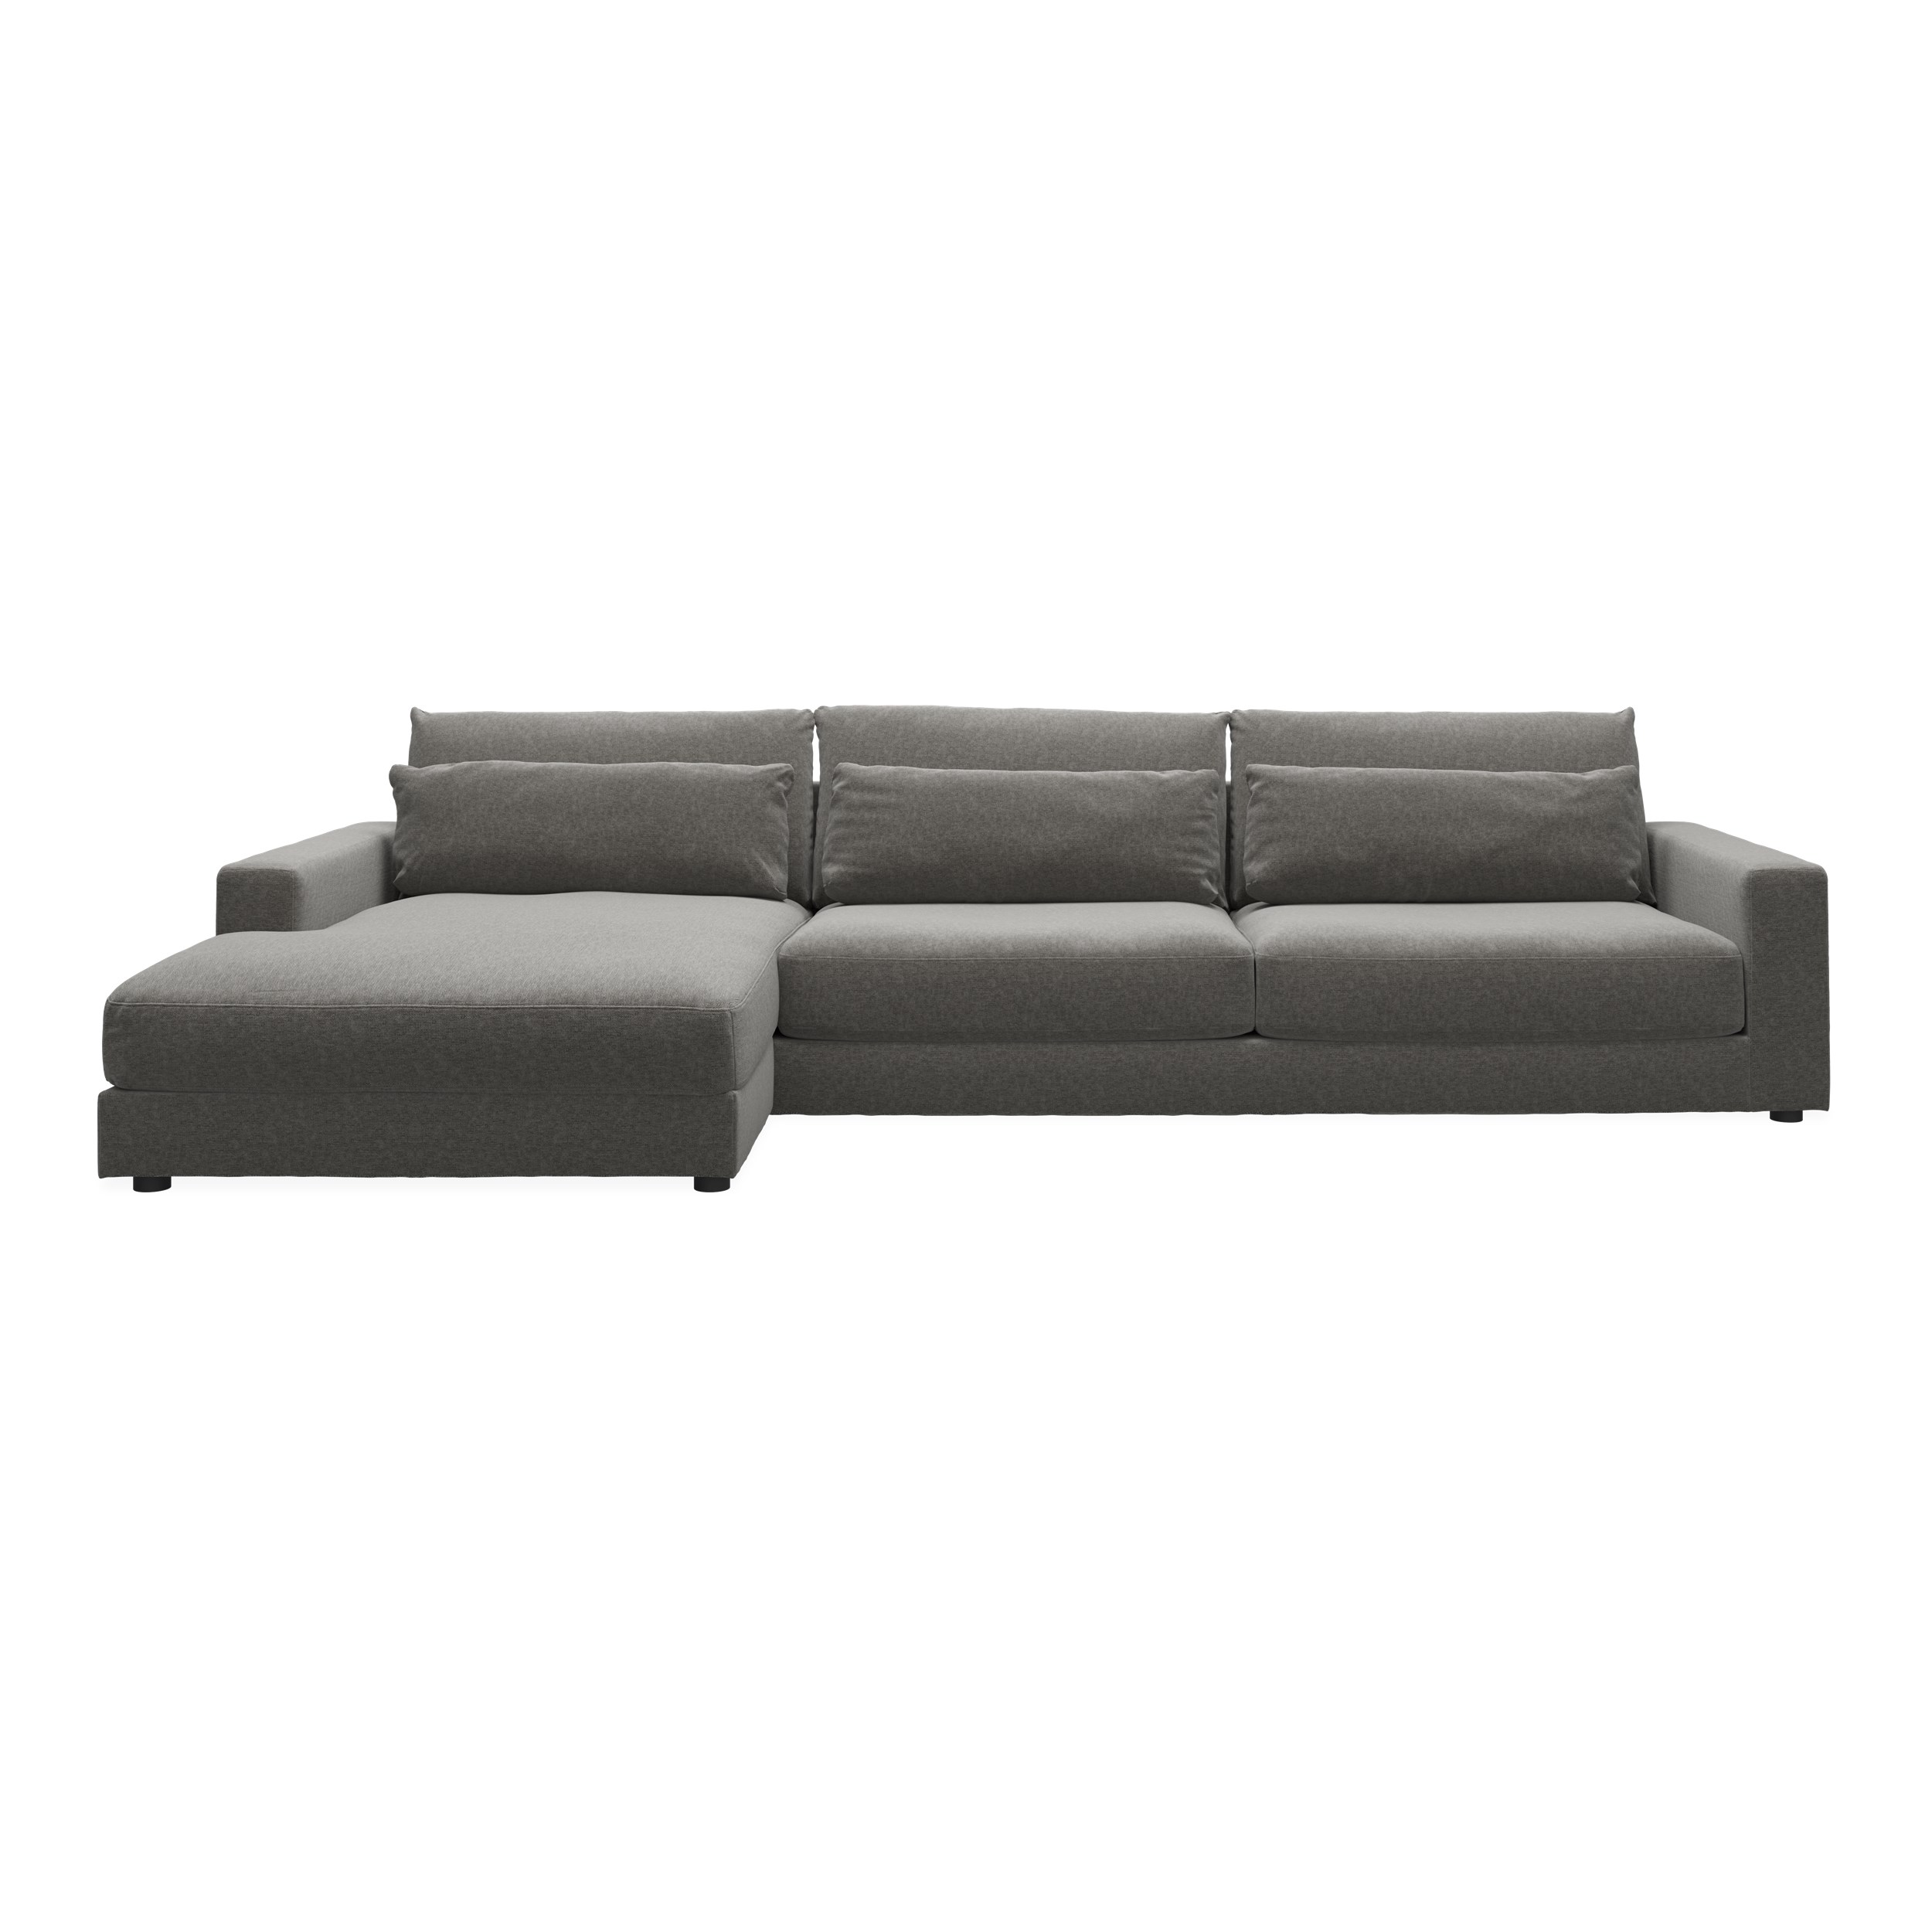 Halmstad Sofa med chaiselong - Danny 18 Grey stof og ben i sort plast